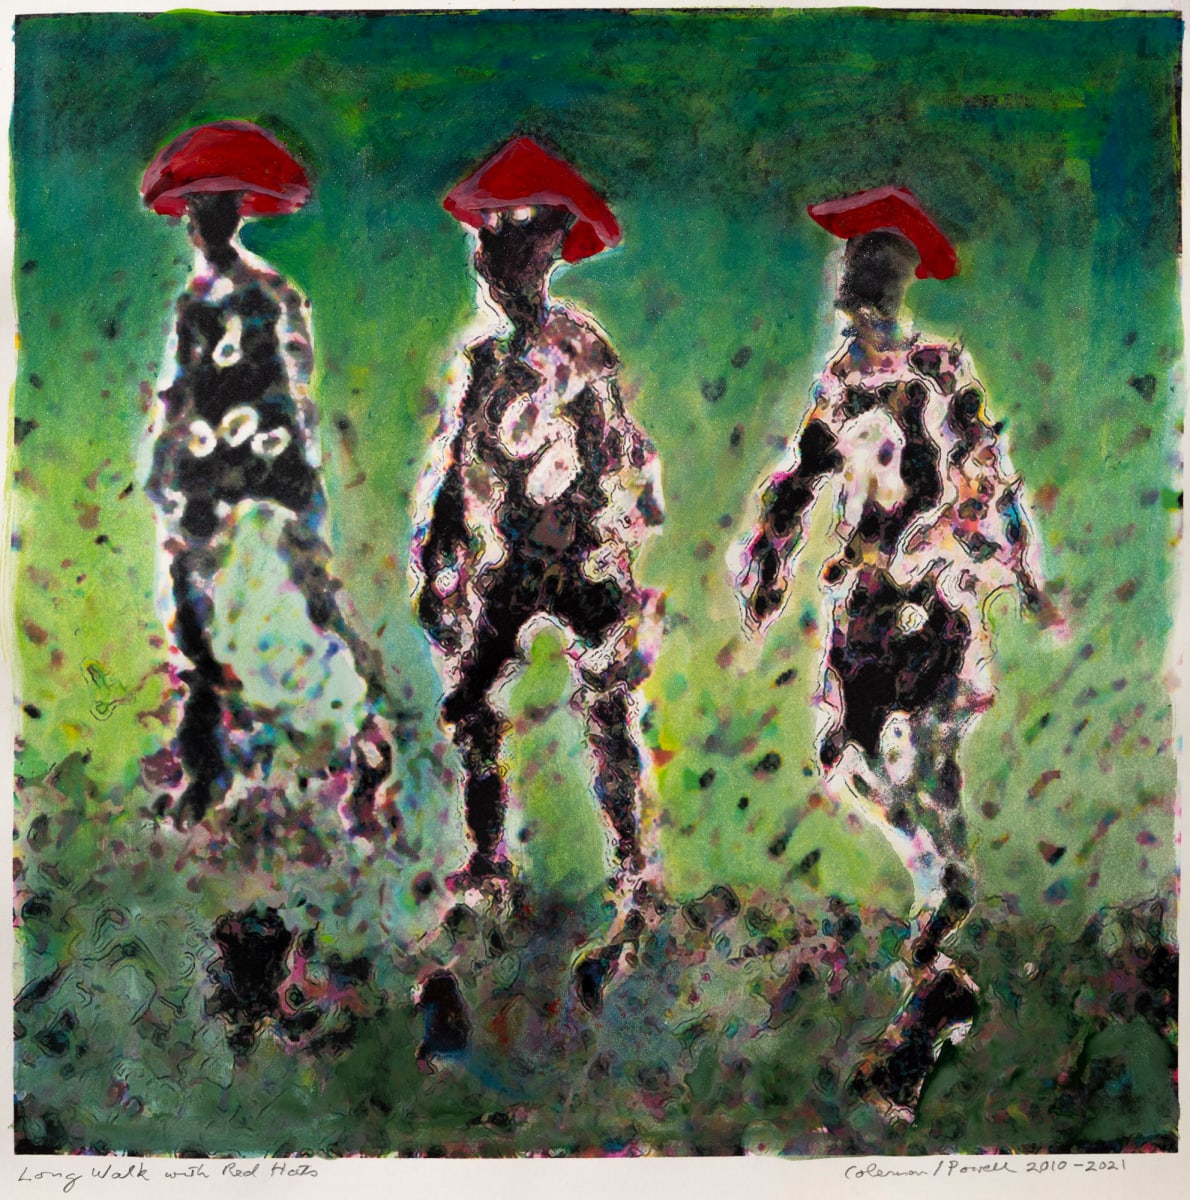 Long Walk With Mushroom Cap Hats by Alan Powell 